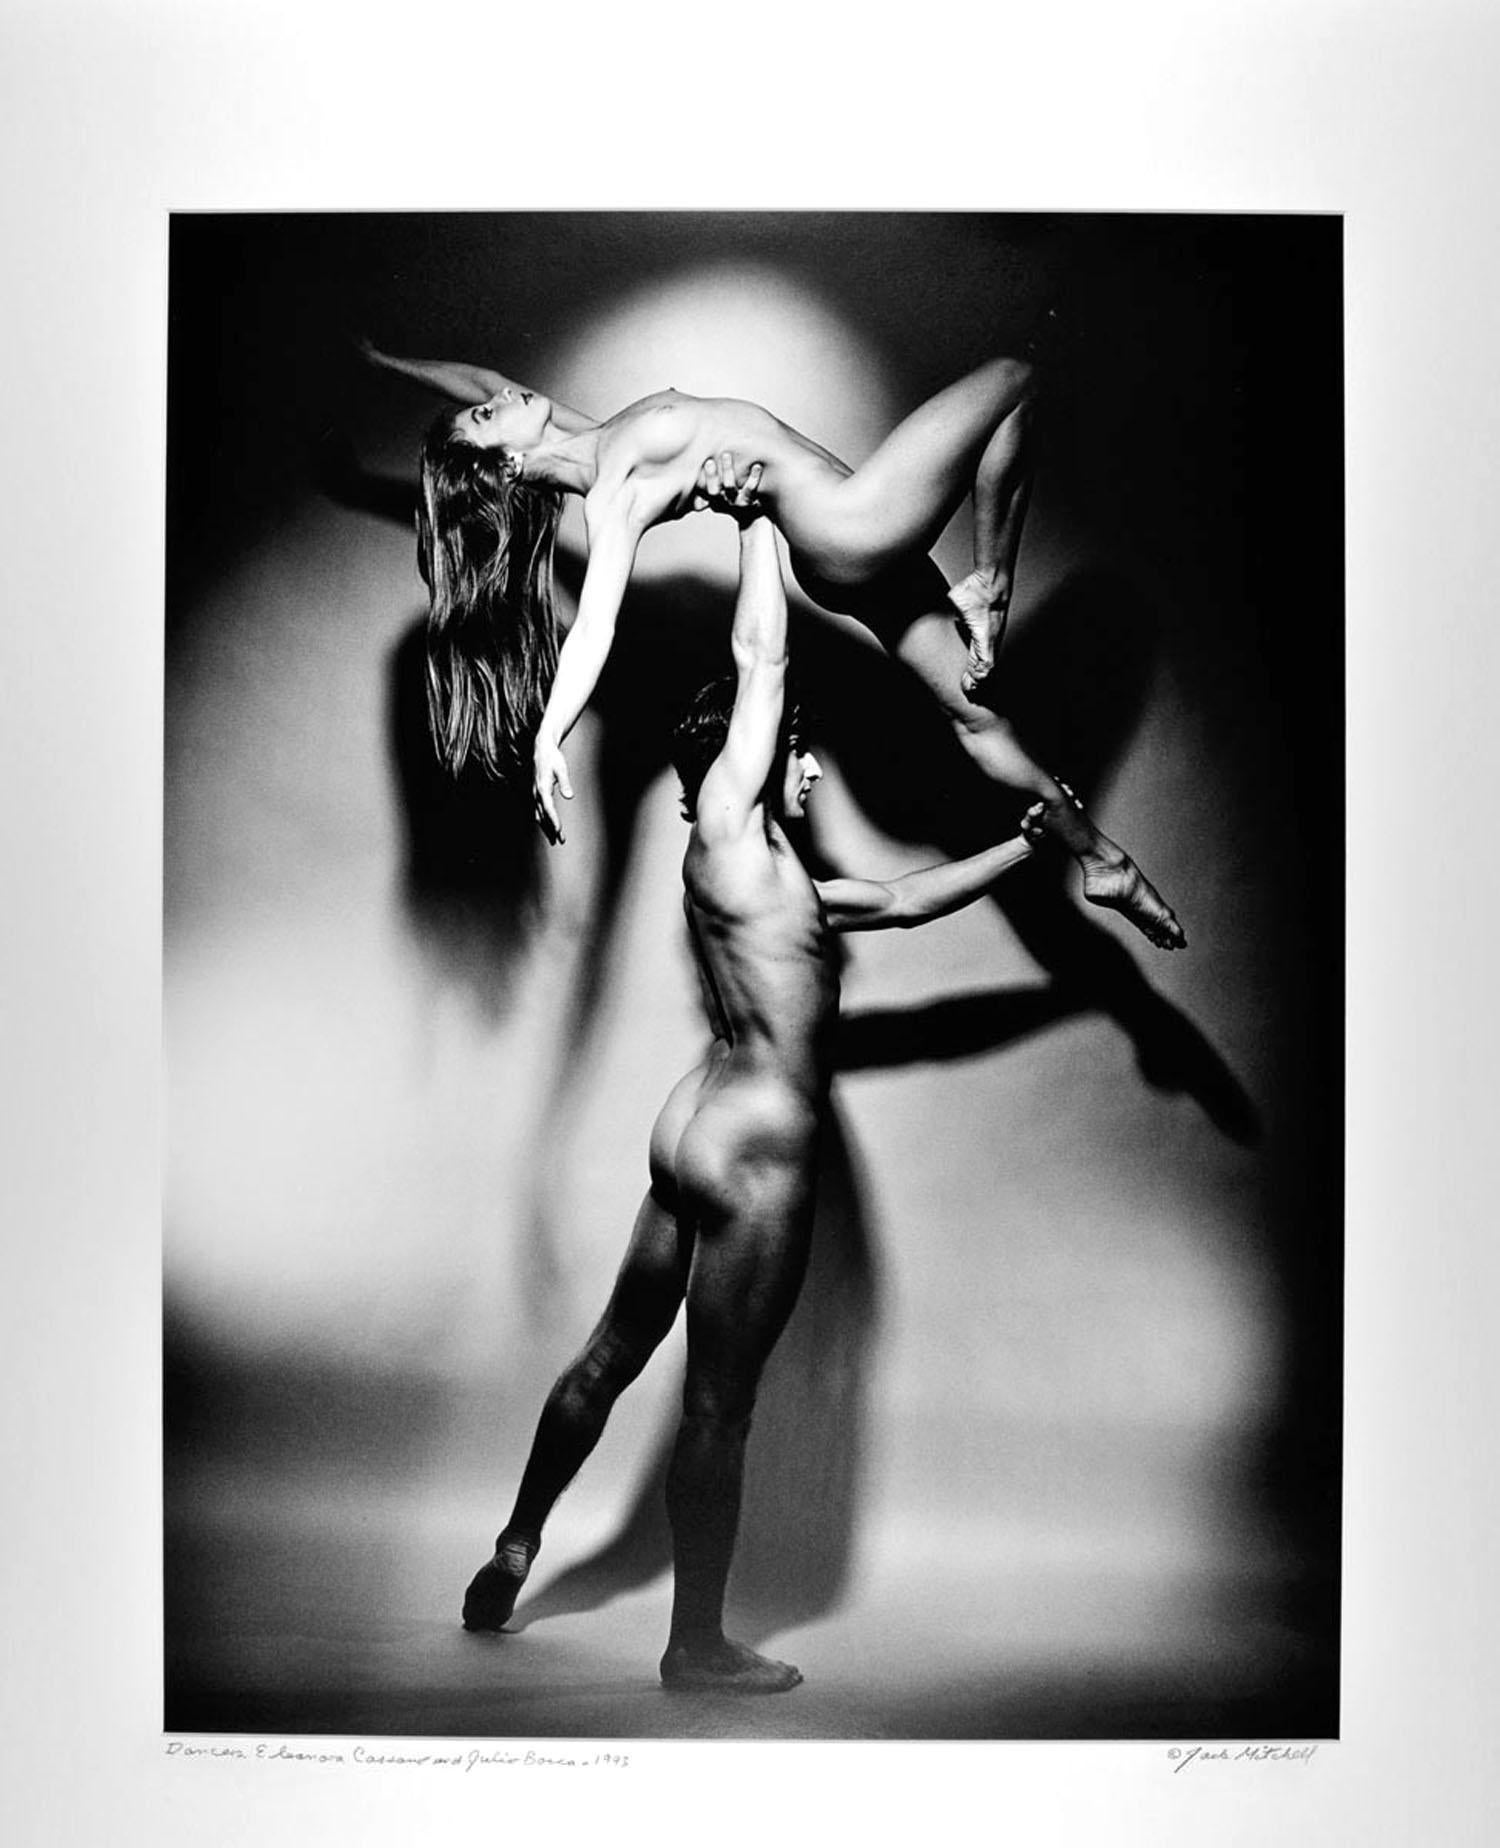 Argentinian dancers Julio Bocca & Eleonora Cassano nude, signed exhibition print